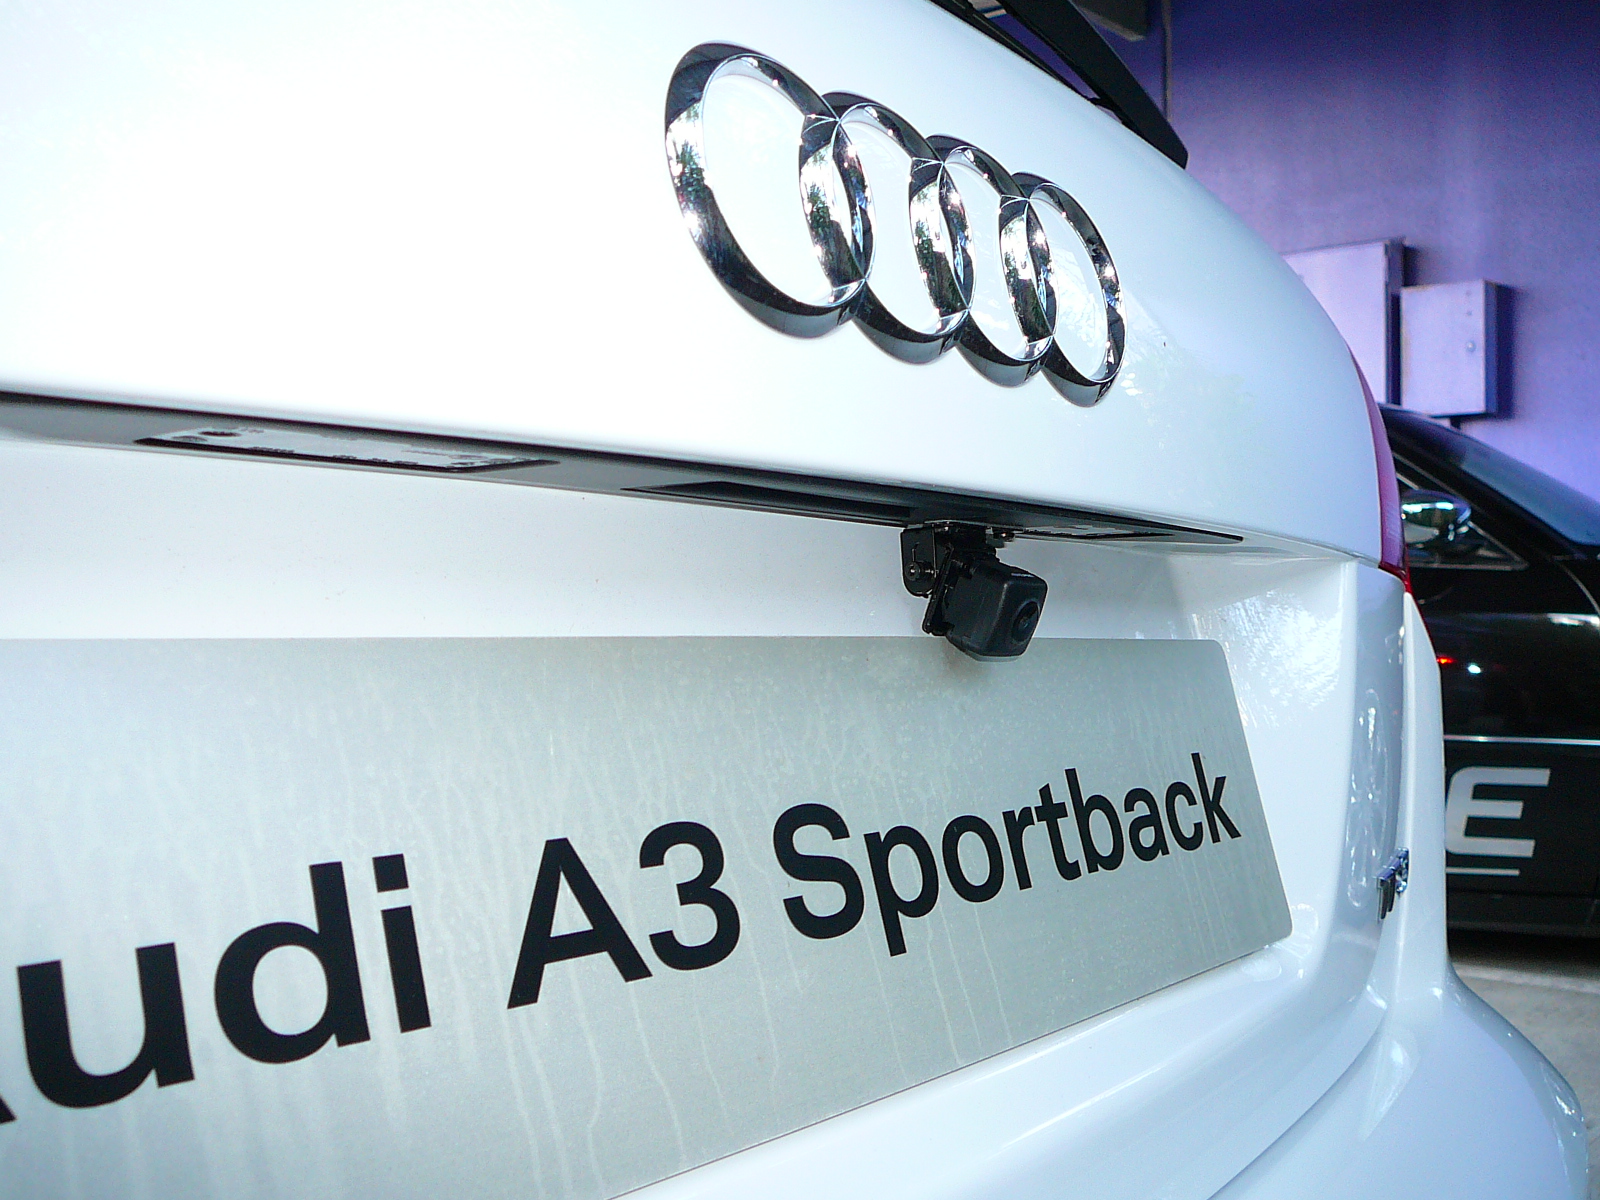 Audi A3 Sportback, Alpine Indash Navigaiton & Reverse Camera System